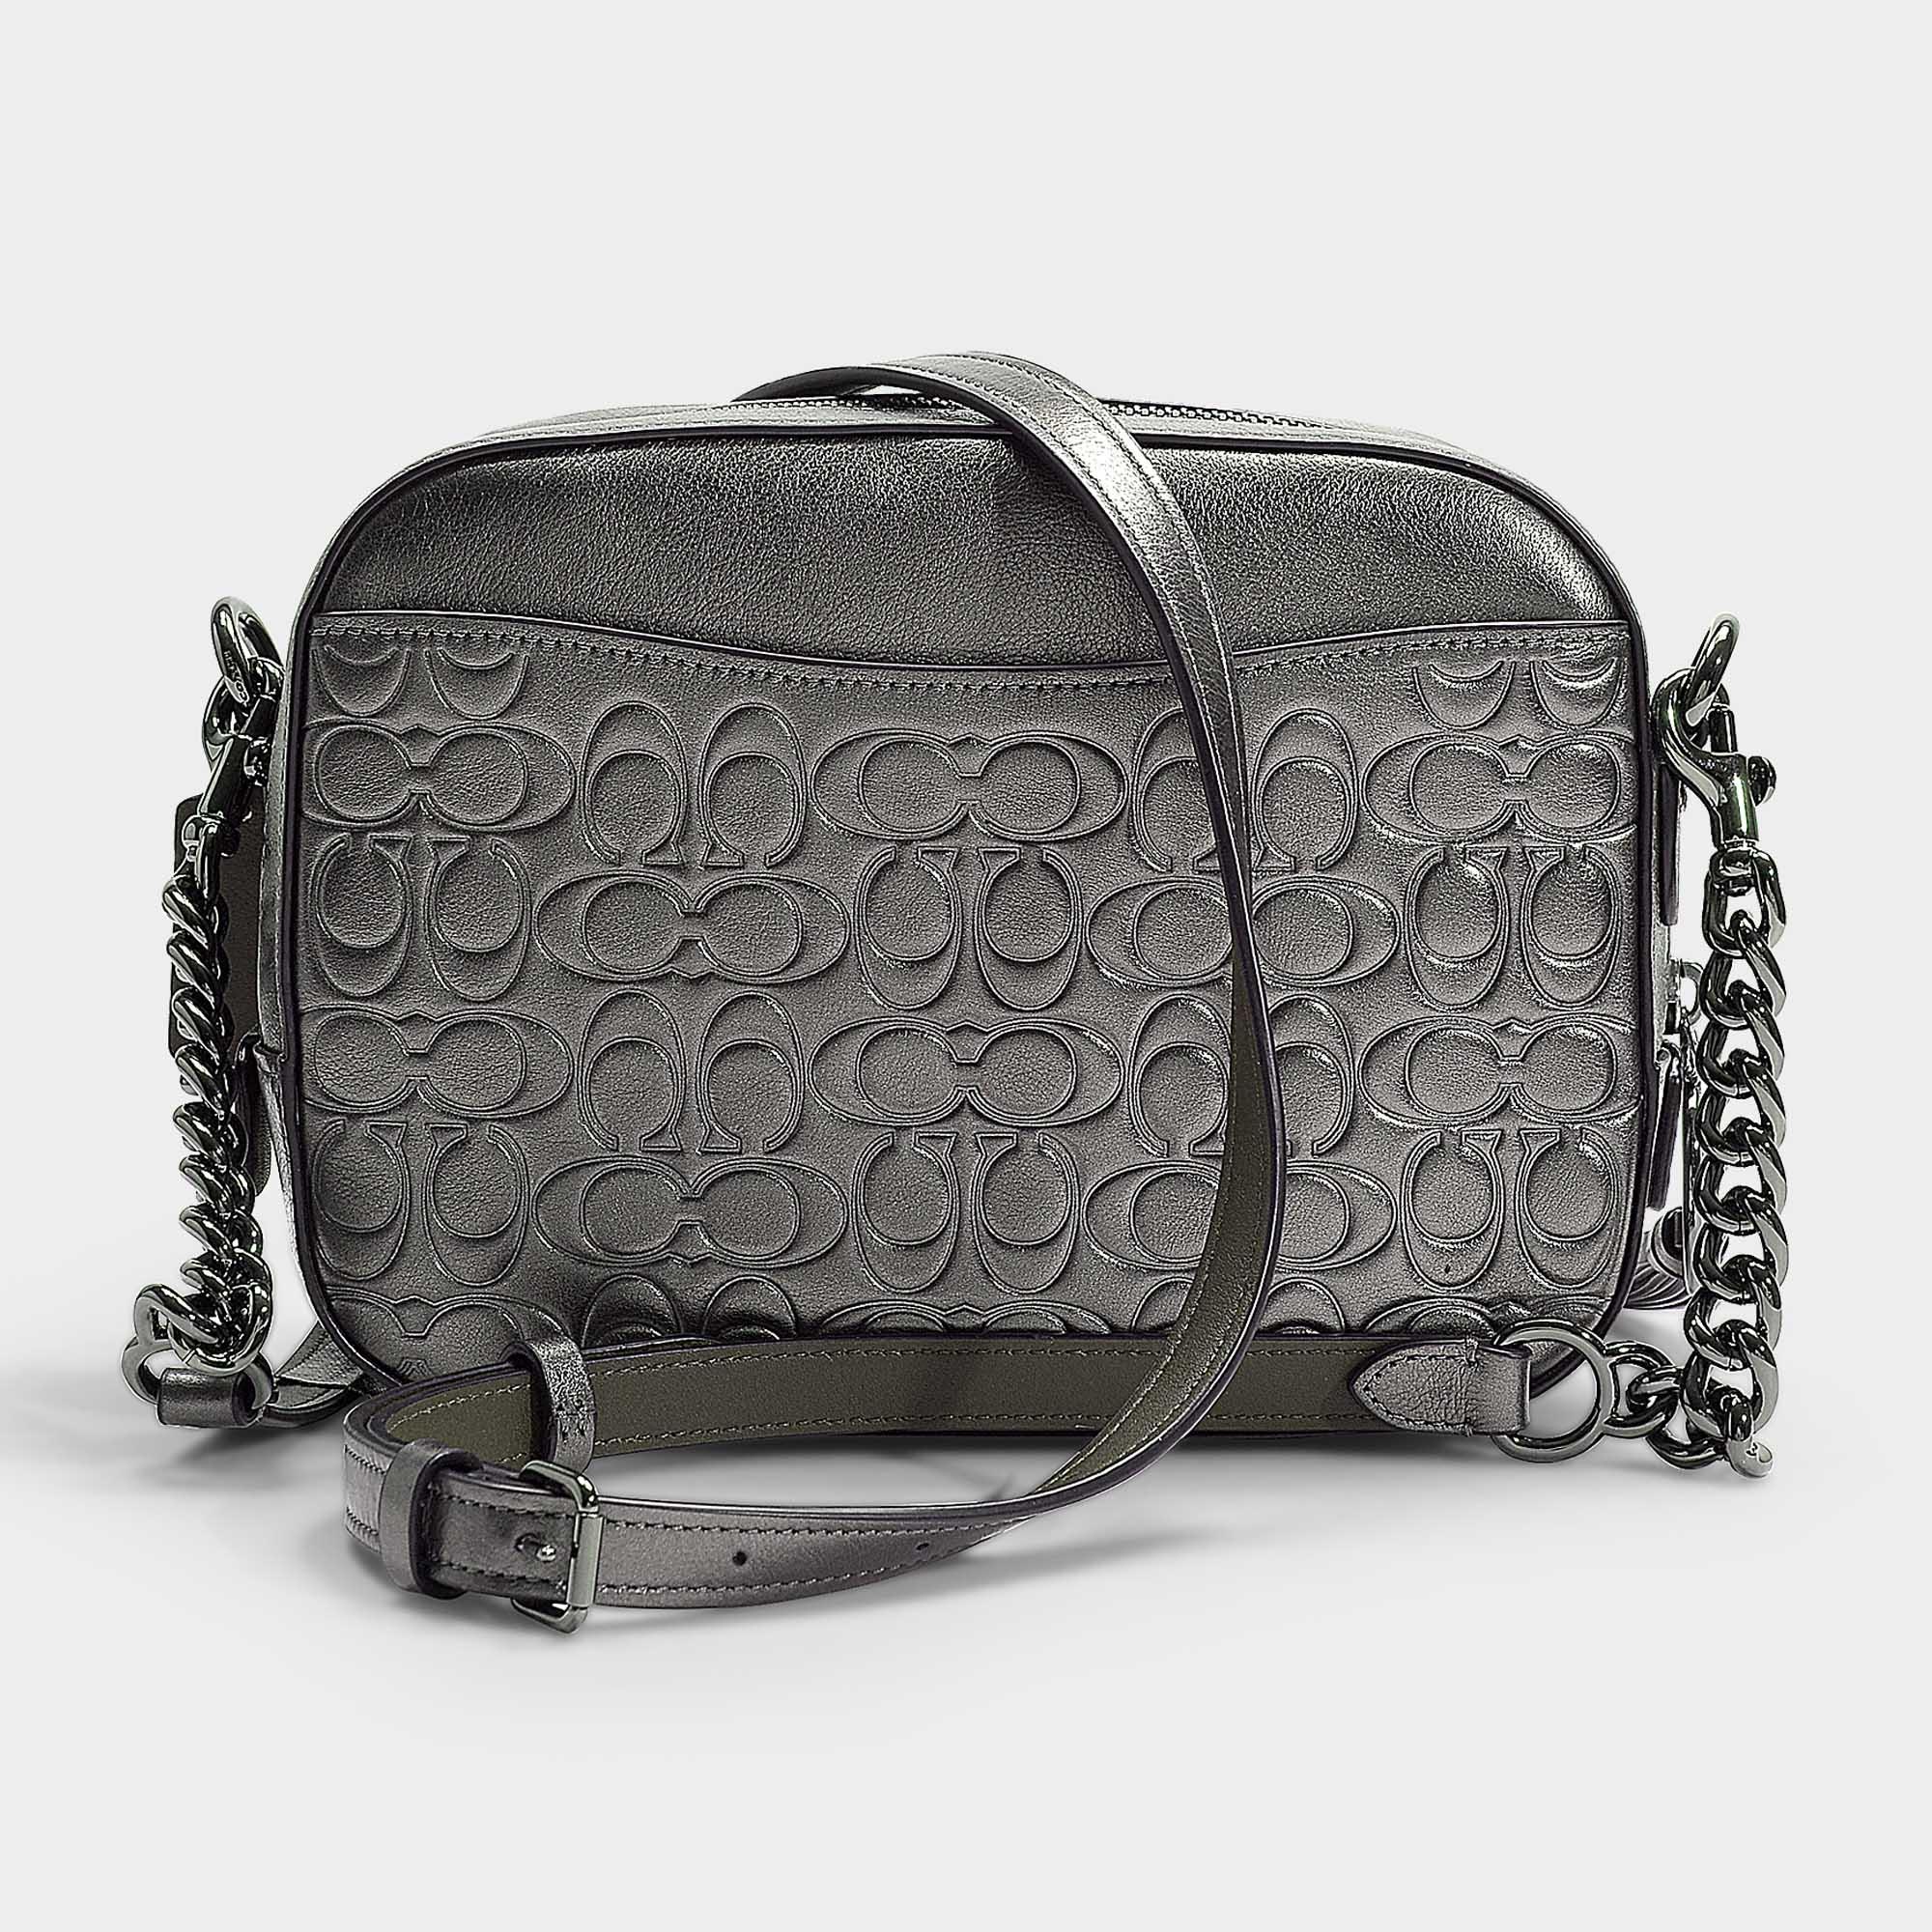 Coach Women's Handbags Metallic - Metallic Cherry Dome Leather Satchel